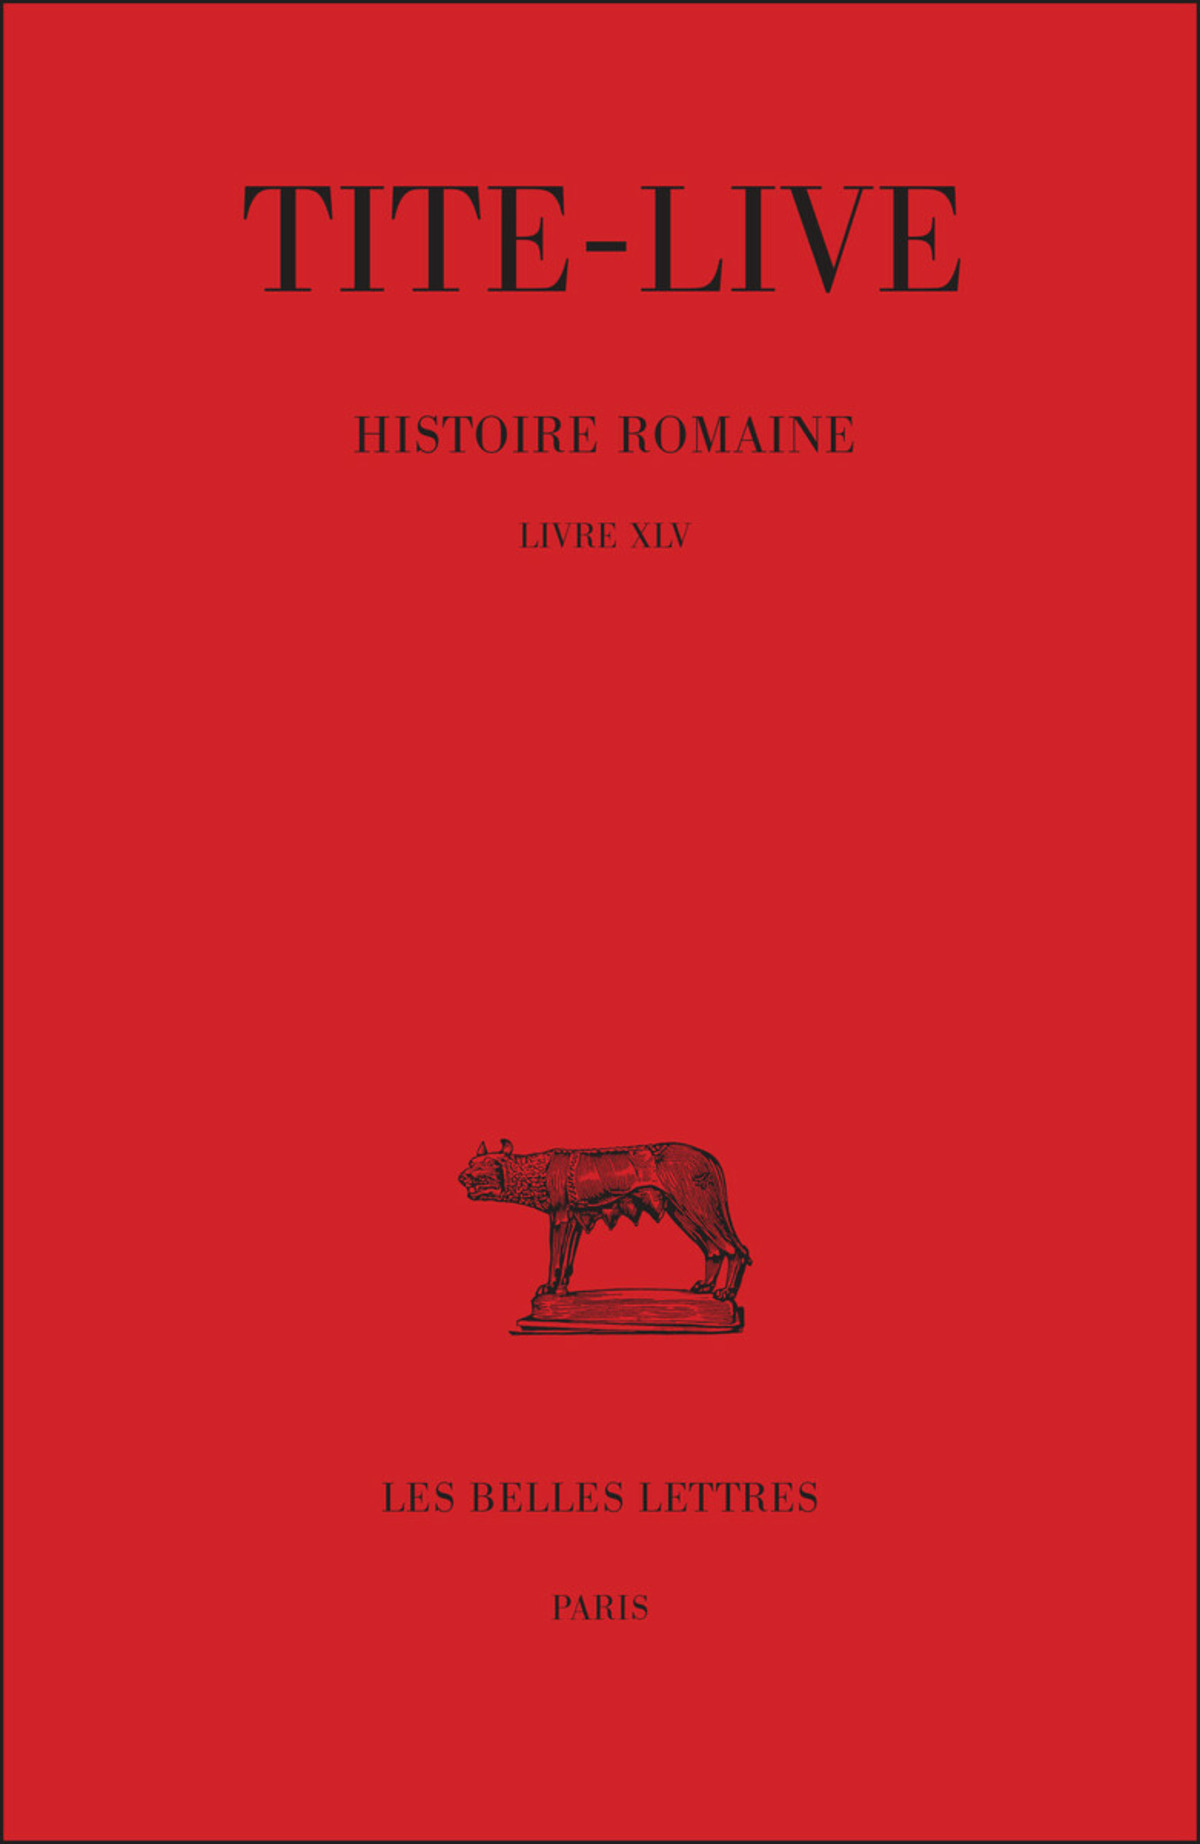 Histoire romaine. Tome XXXIII : Livre XLV. Fragments